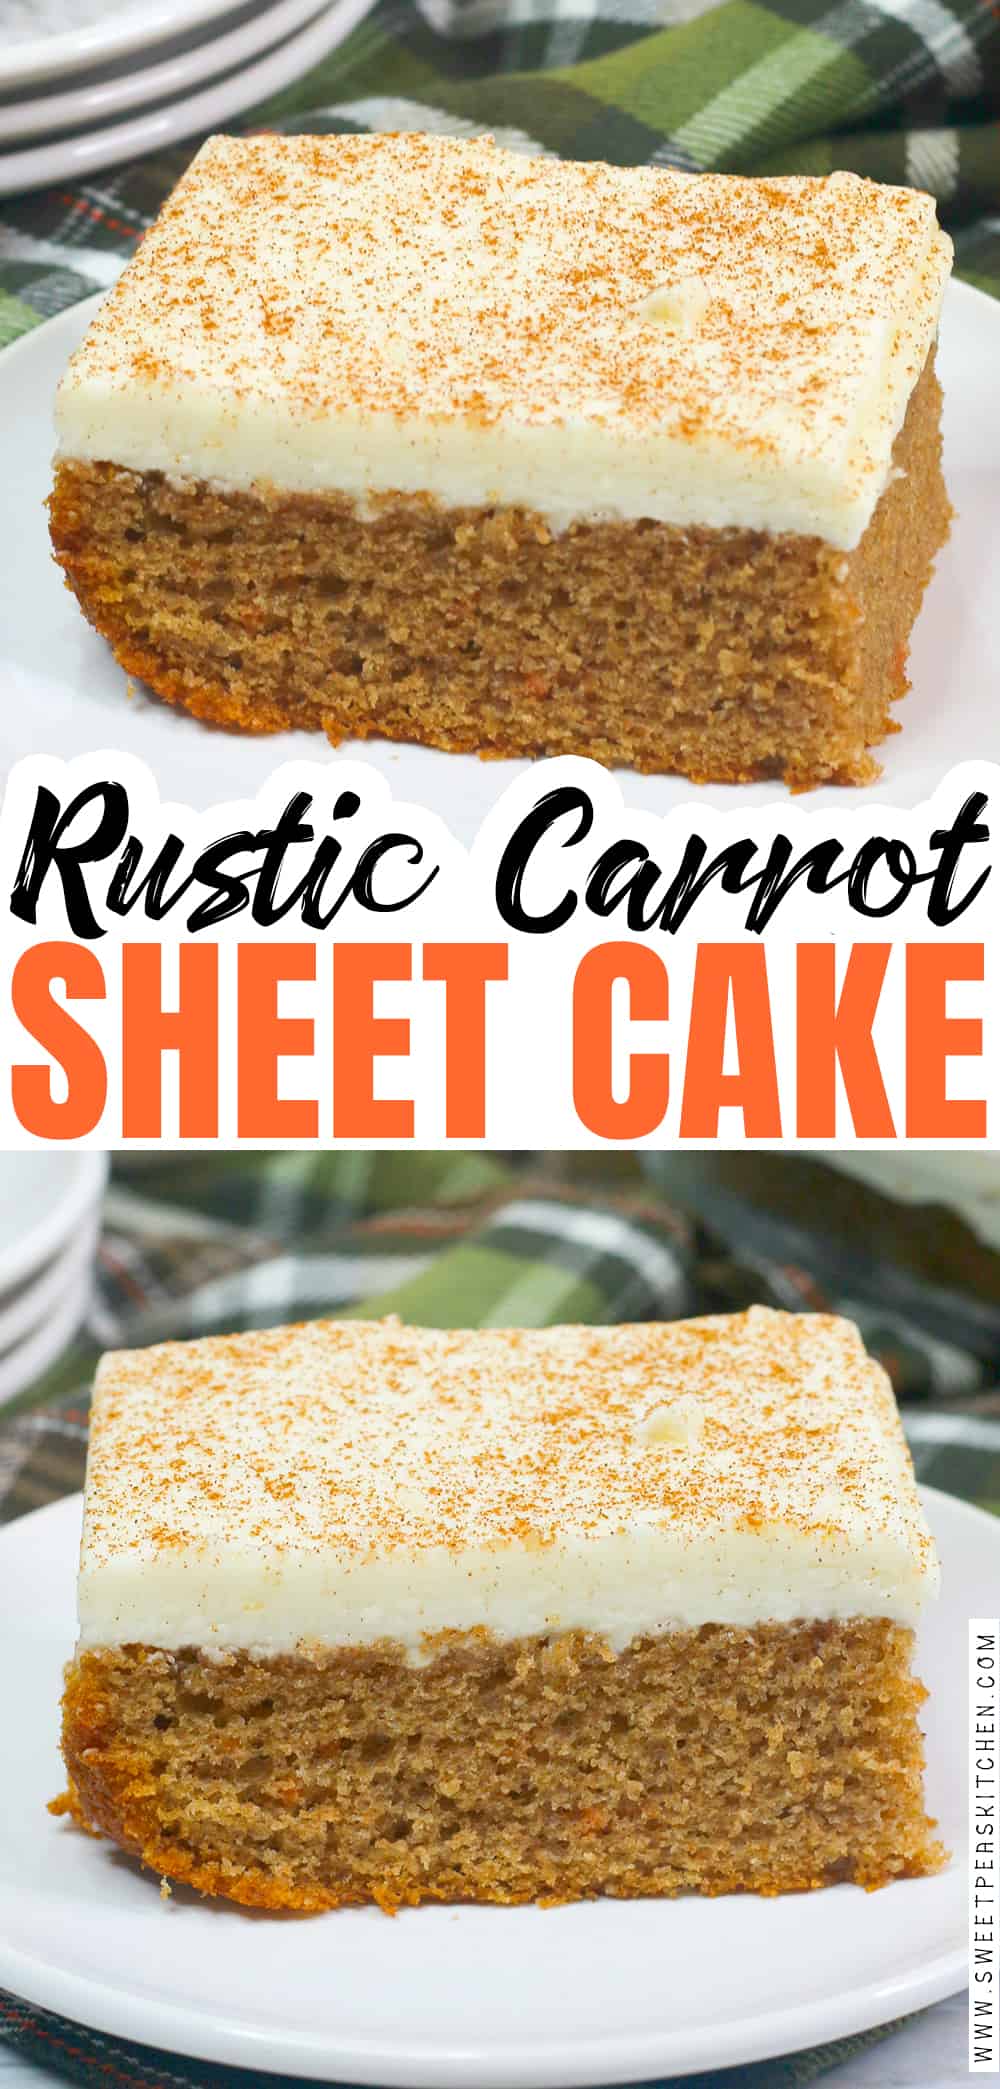 Rustic Carrot Sheet Cake